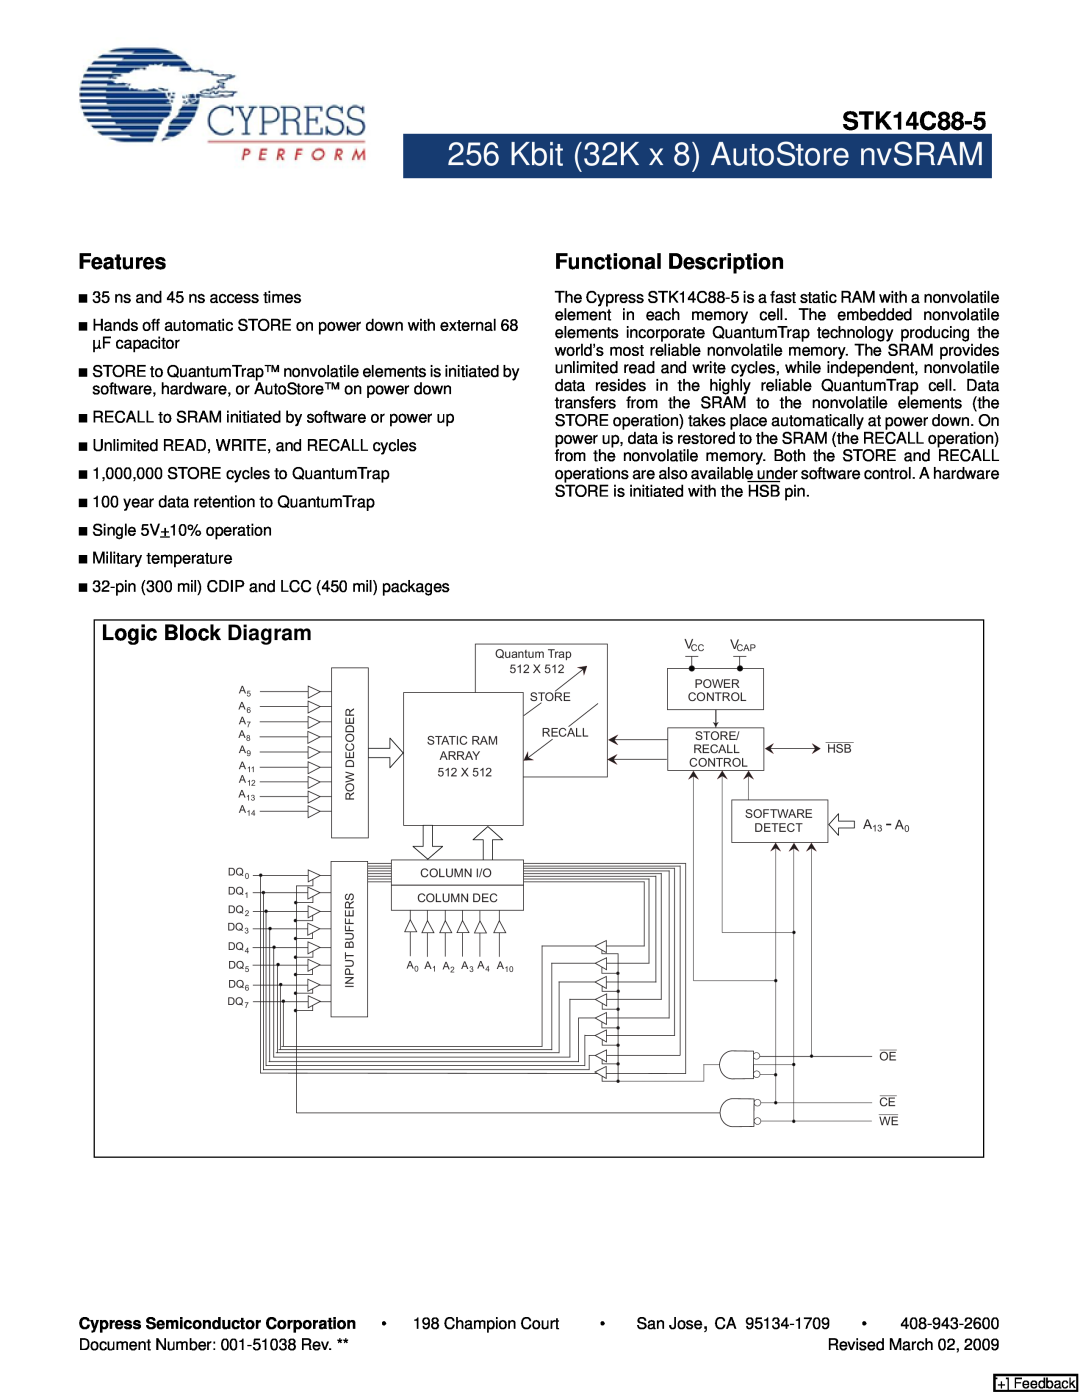 Cypress STK14C88-5 manual Features, Functional Description, Kbit 32K x 8 AutoStore nvSRAM, Logic Block Diagram 